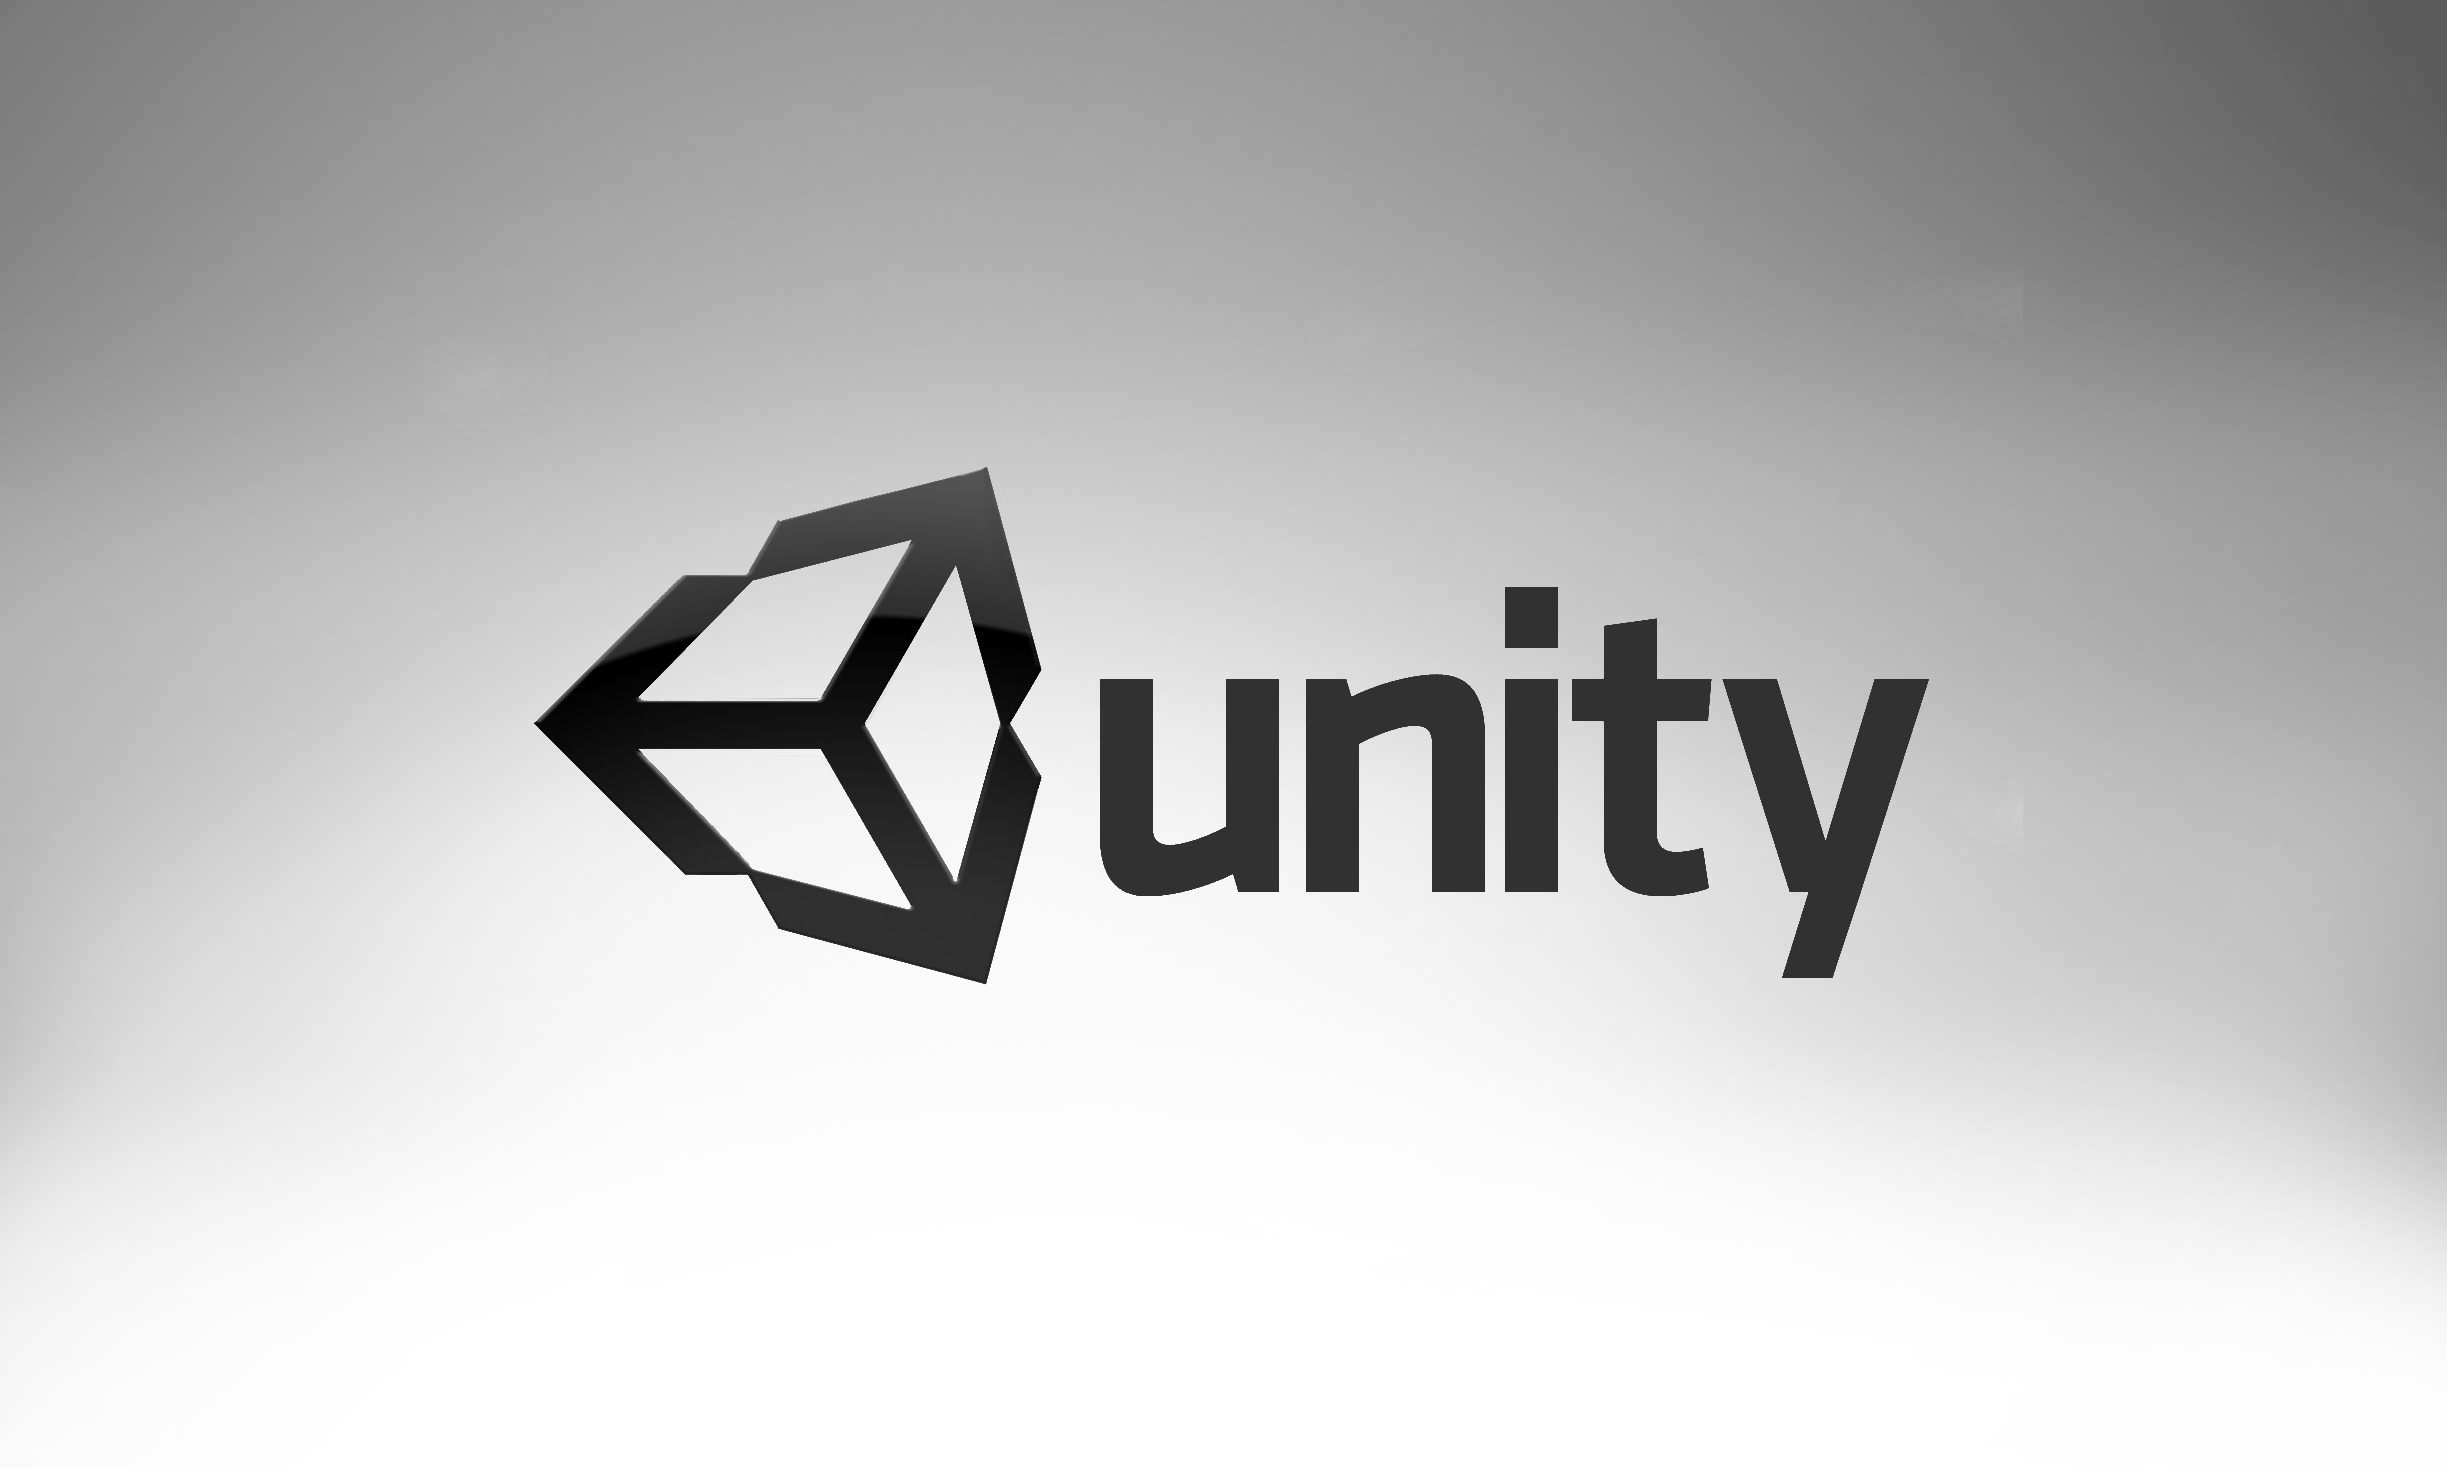 unity wallpaper,logo,text,font,brand,graphics